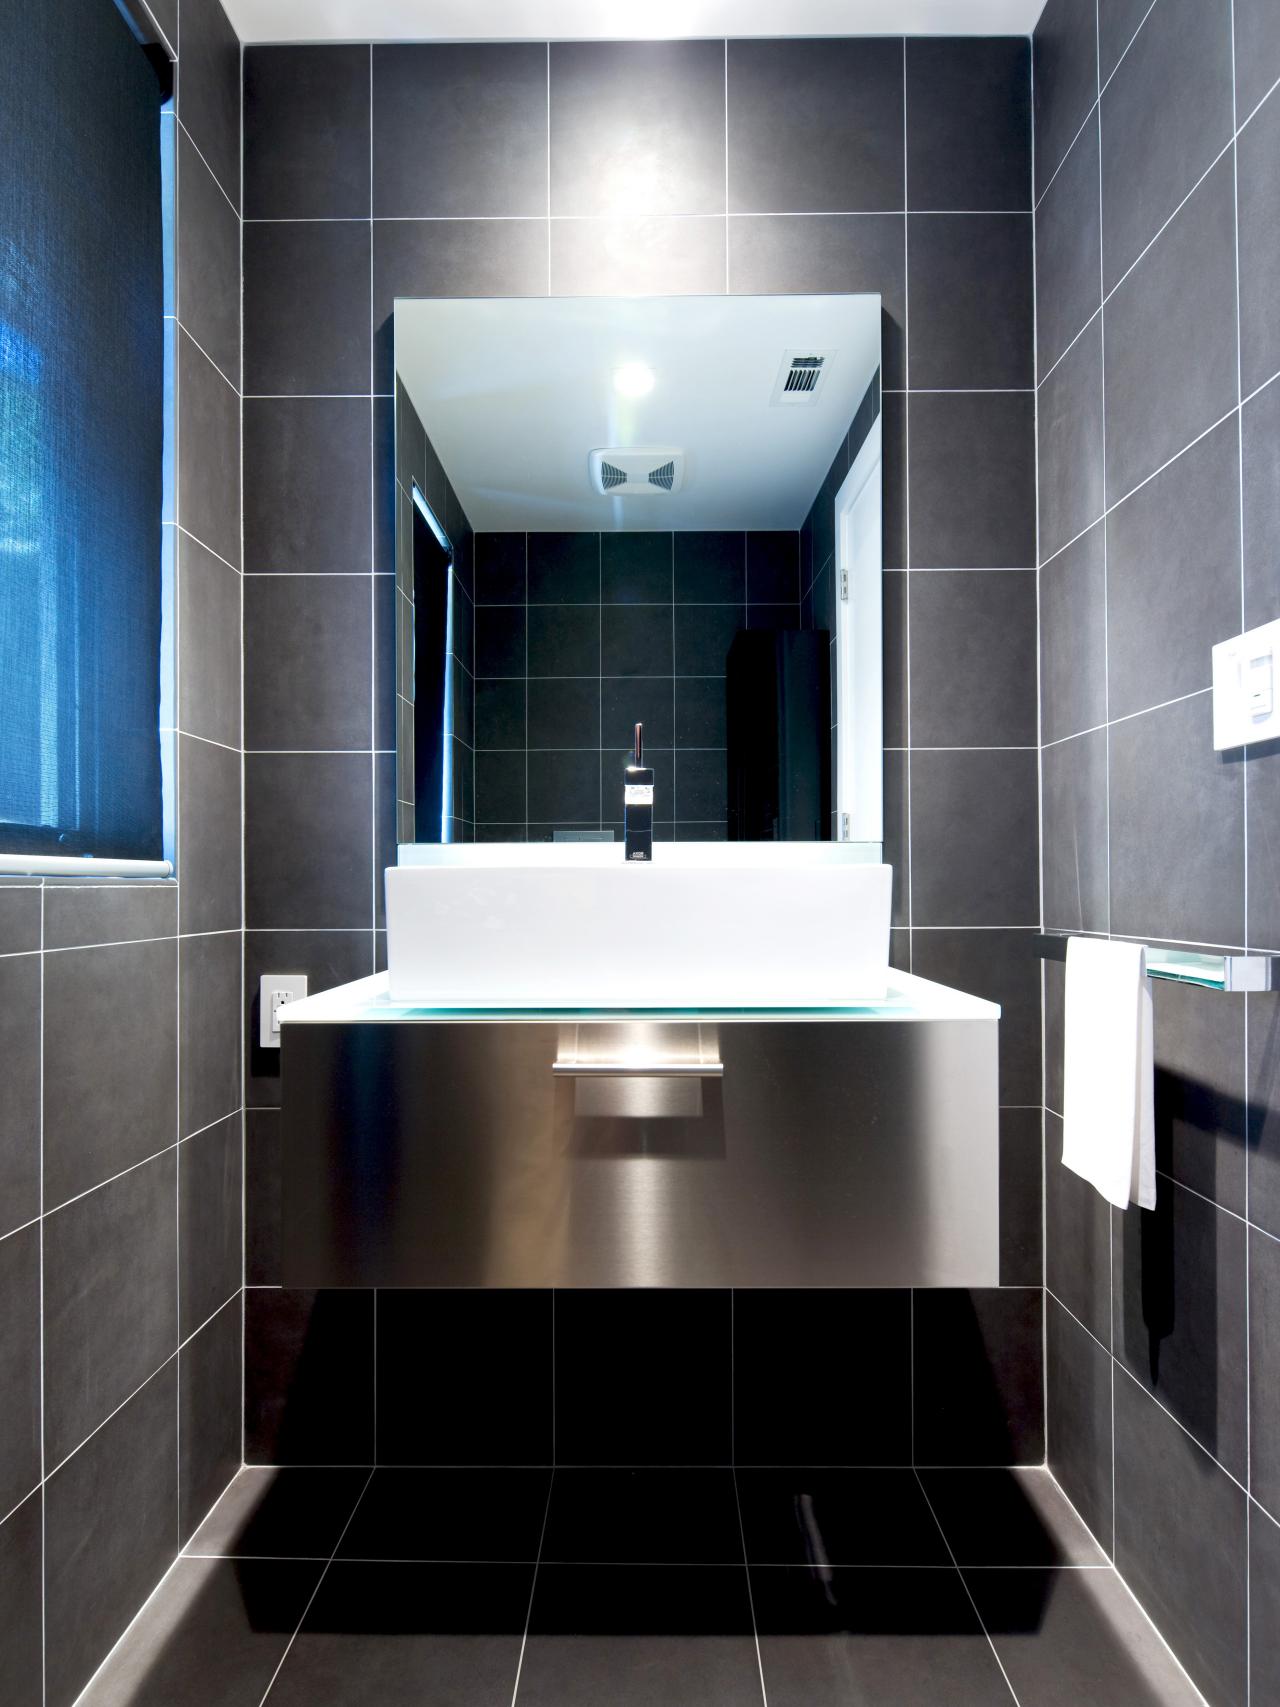 9 Bold Bathroom Tile Designs | HGTV's Decorating & Design ...